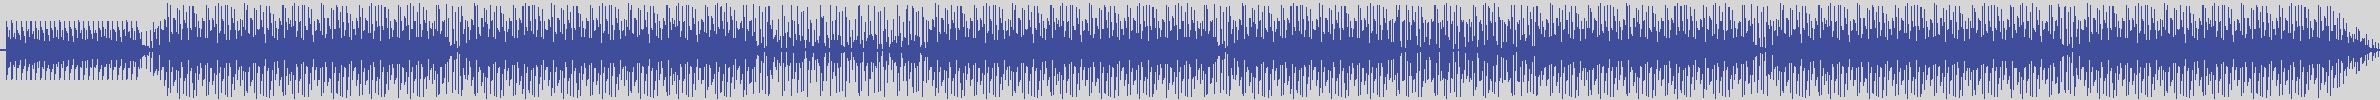 nf_boyz_records [NFY055] U.s.s. - Chili Pepper [Original Mix] audio wave form